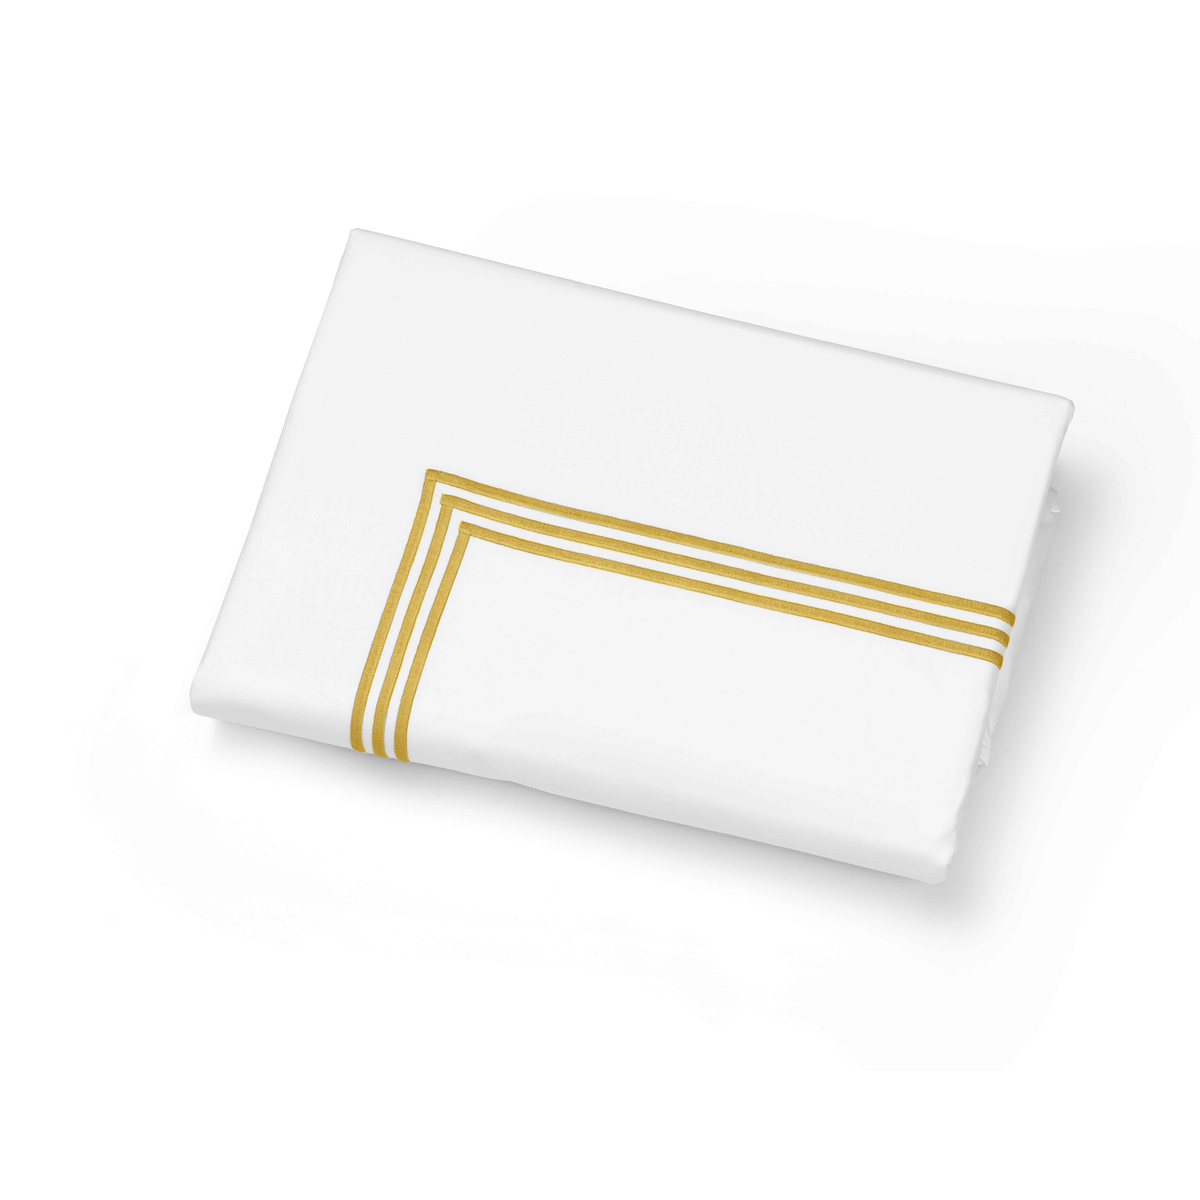 Folded Duvet Cover of Signoria Platinum Percale Bedding in White/Gold Color